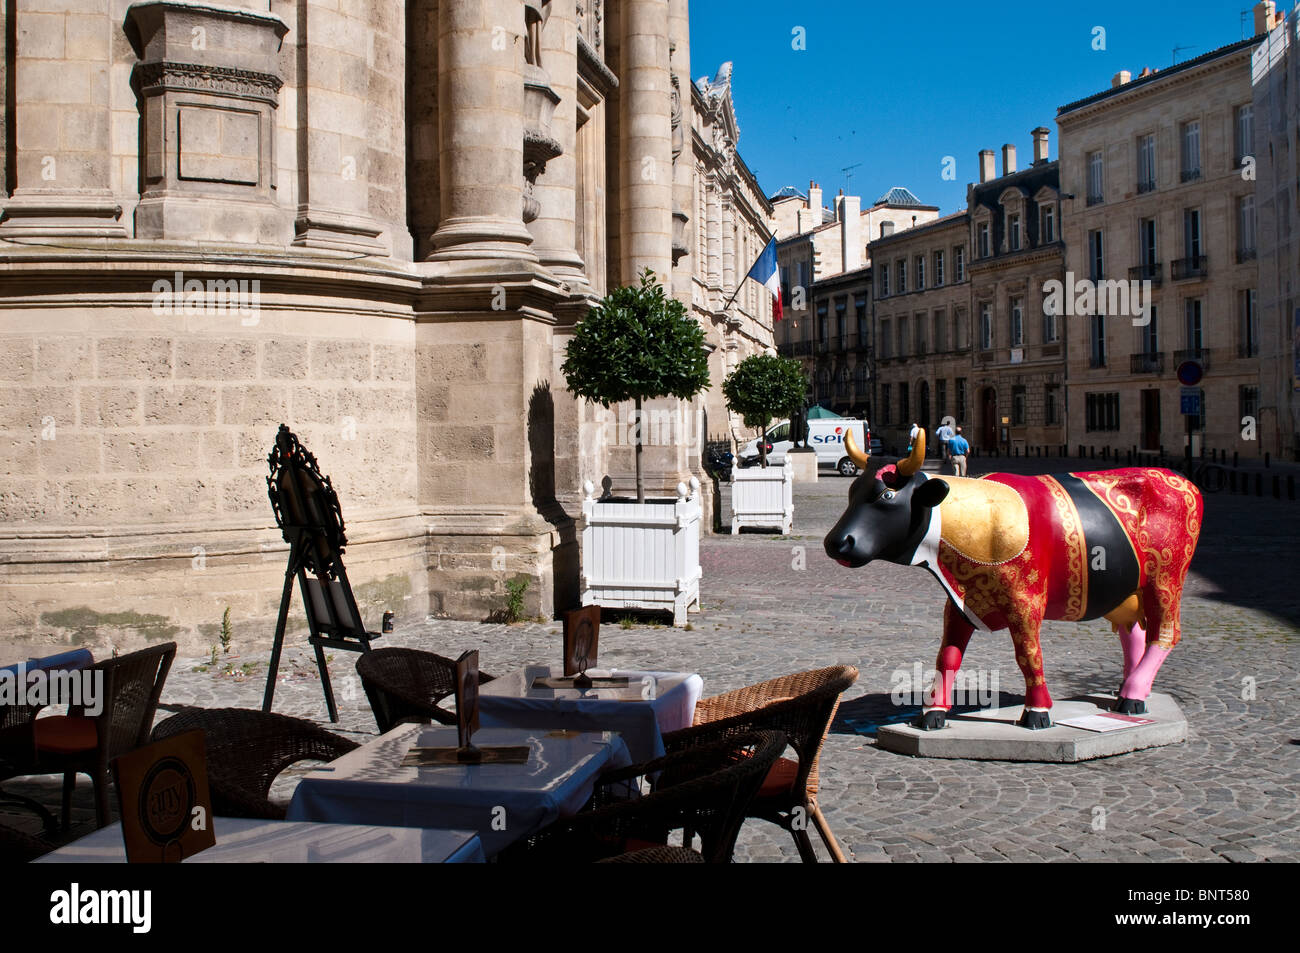 Painted sculpture of a cow, part of the Cow Parade event, Place du Chapelet Bordeaux, France Stock Photo